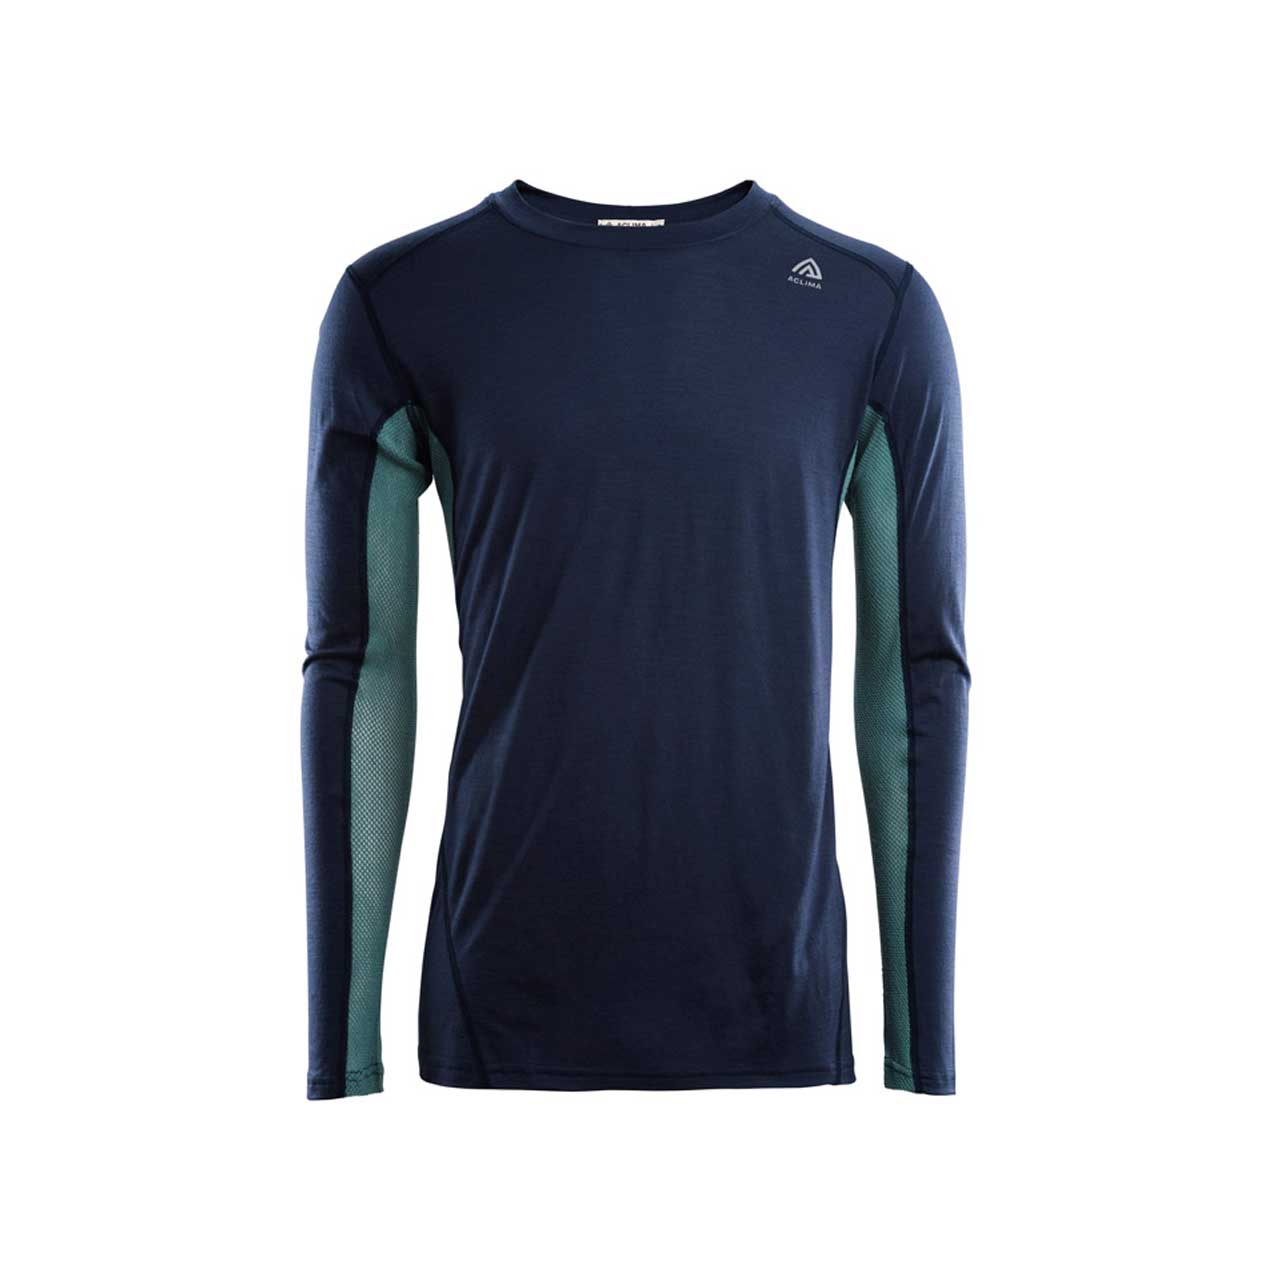 Aclima Lightwool Sports Shirt - Navy Blazer, S